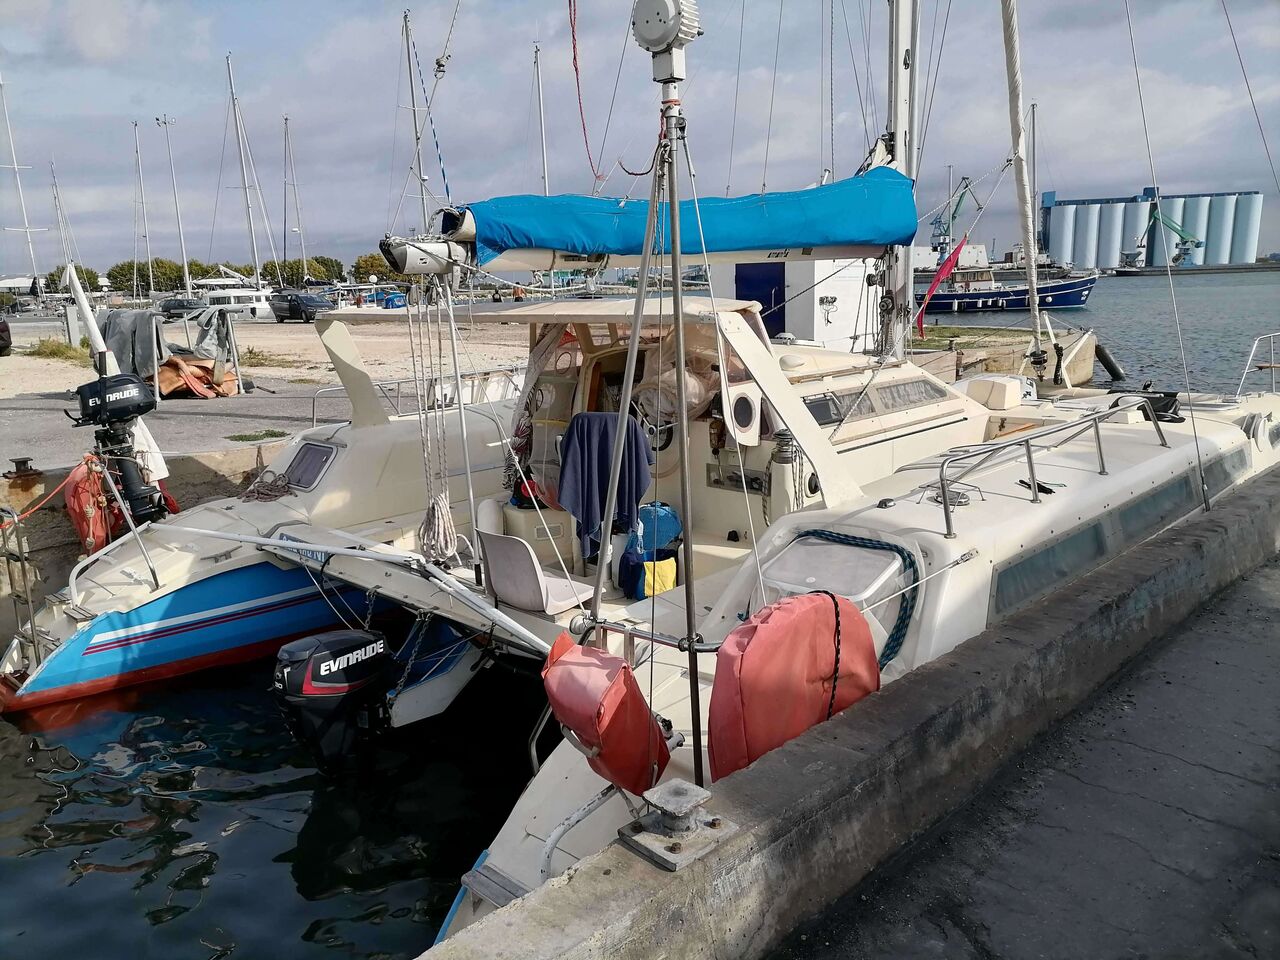 EDEL Strat CAT 35 (sailboat) for sale